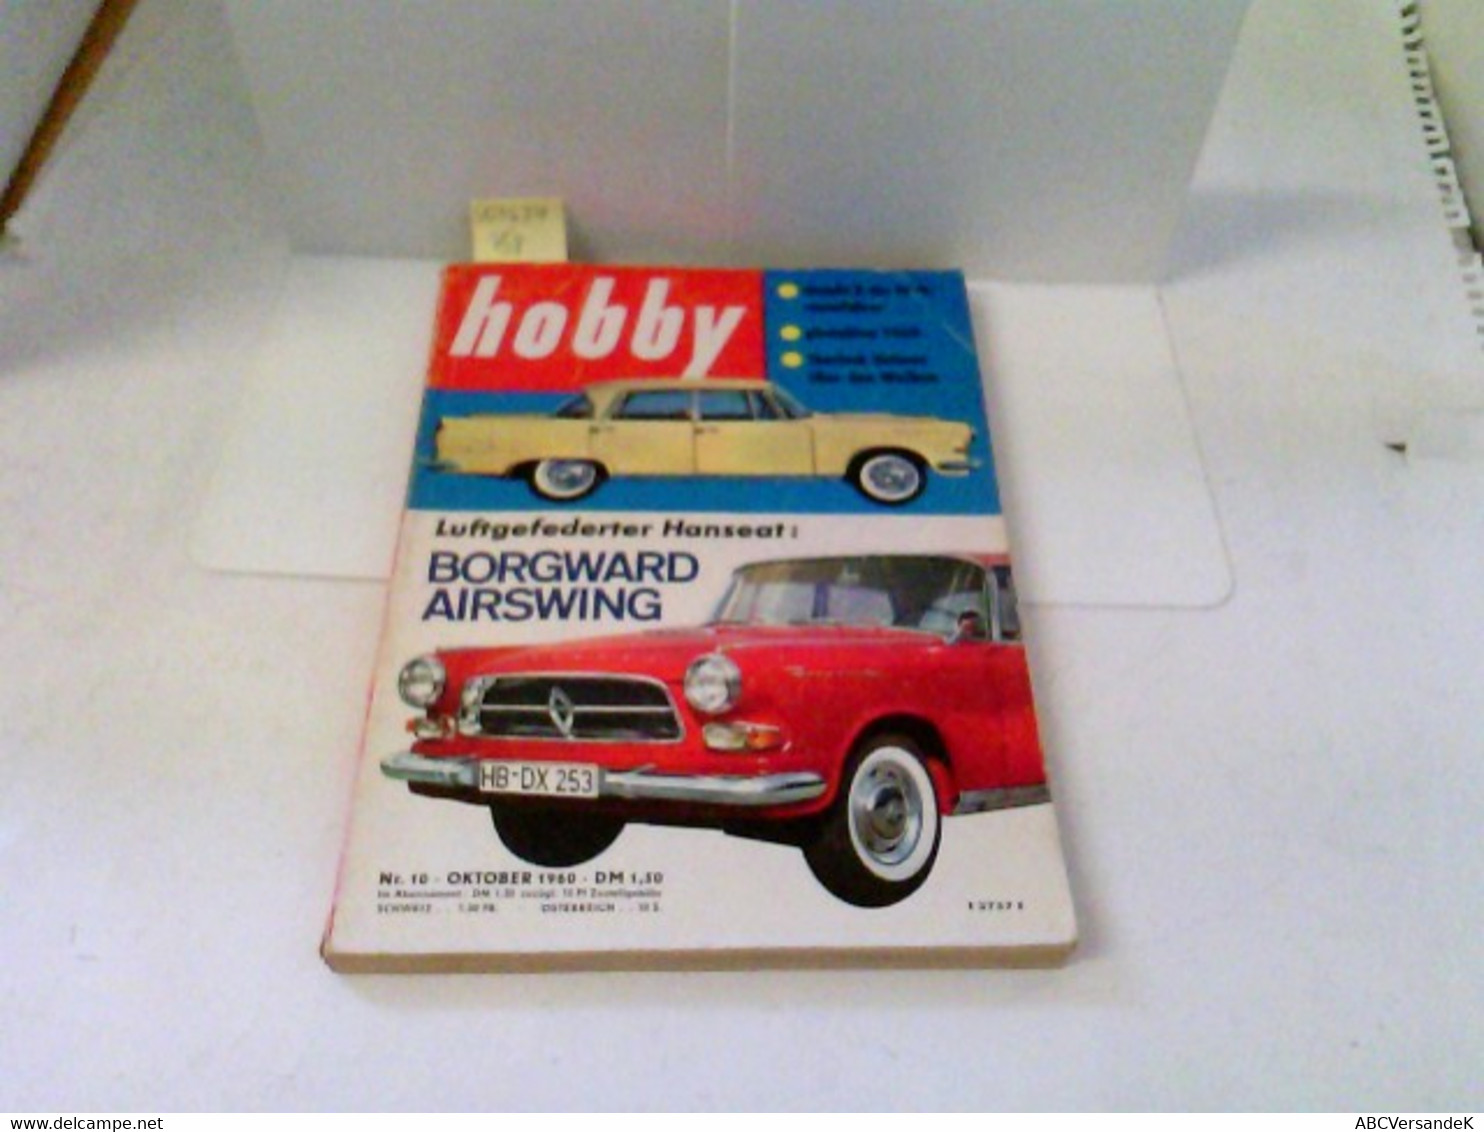 Hobby - Das Magazin Der Technik - Heft 1960/10 - Luftgefederter Hanseat: Borgward Airswing U.v.m. - Técnico